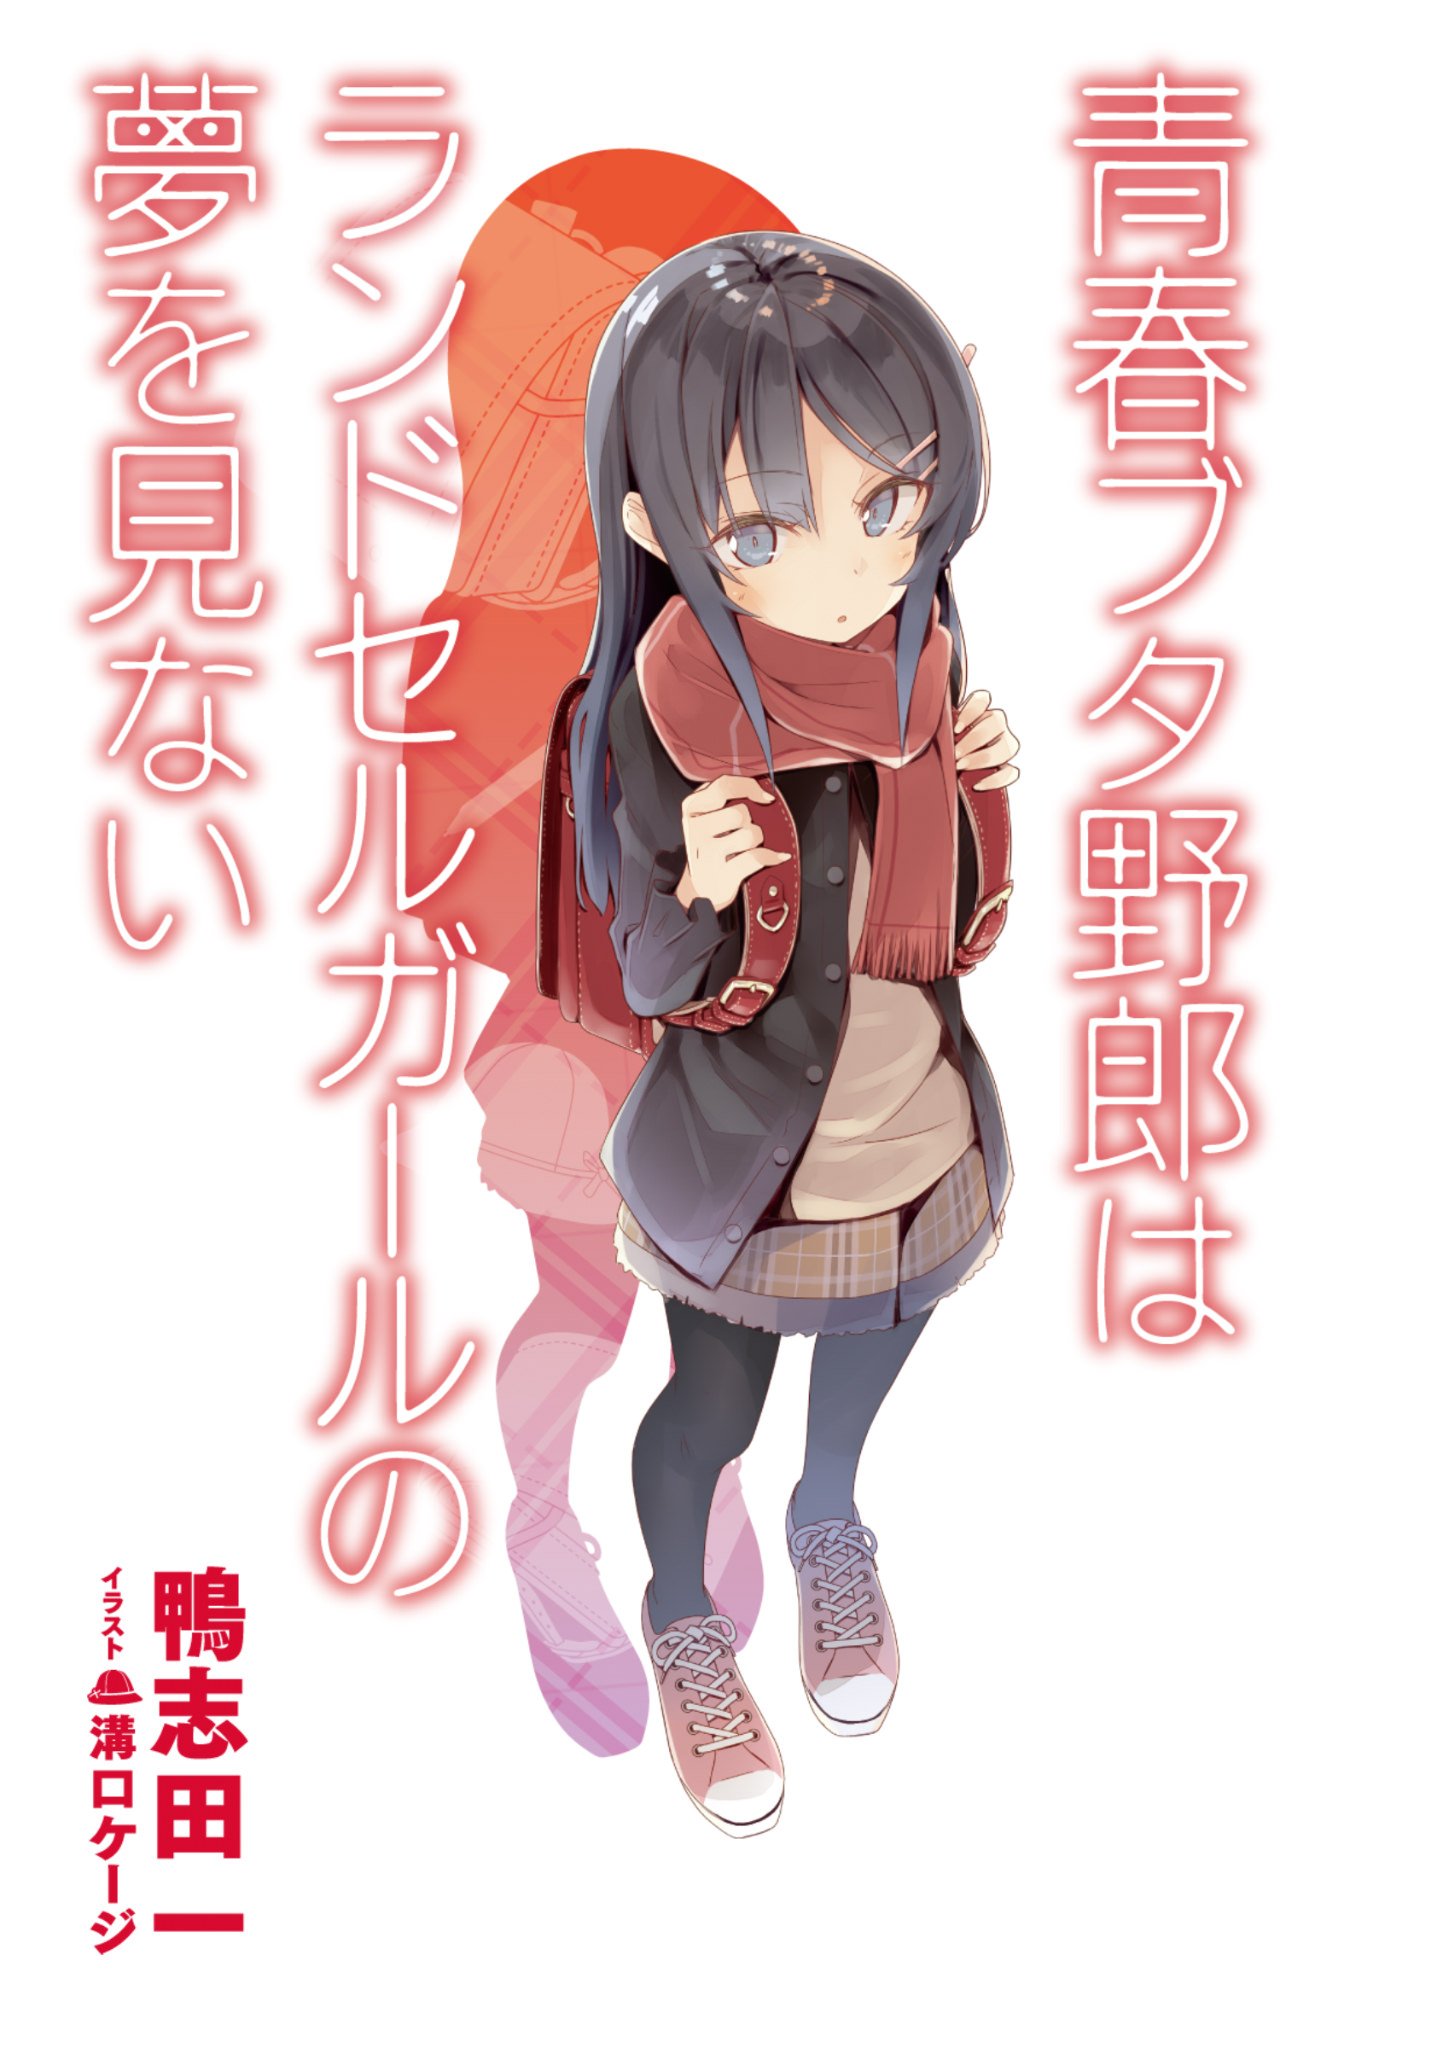 Kiyoe on Twitter "Seishun Buta Yarou Series vol 9